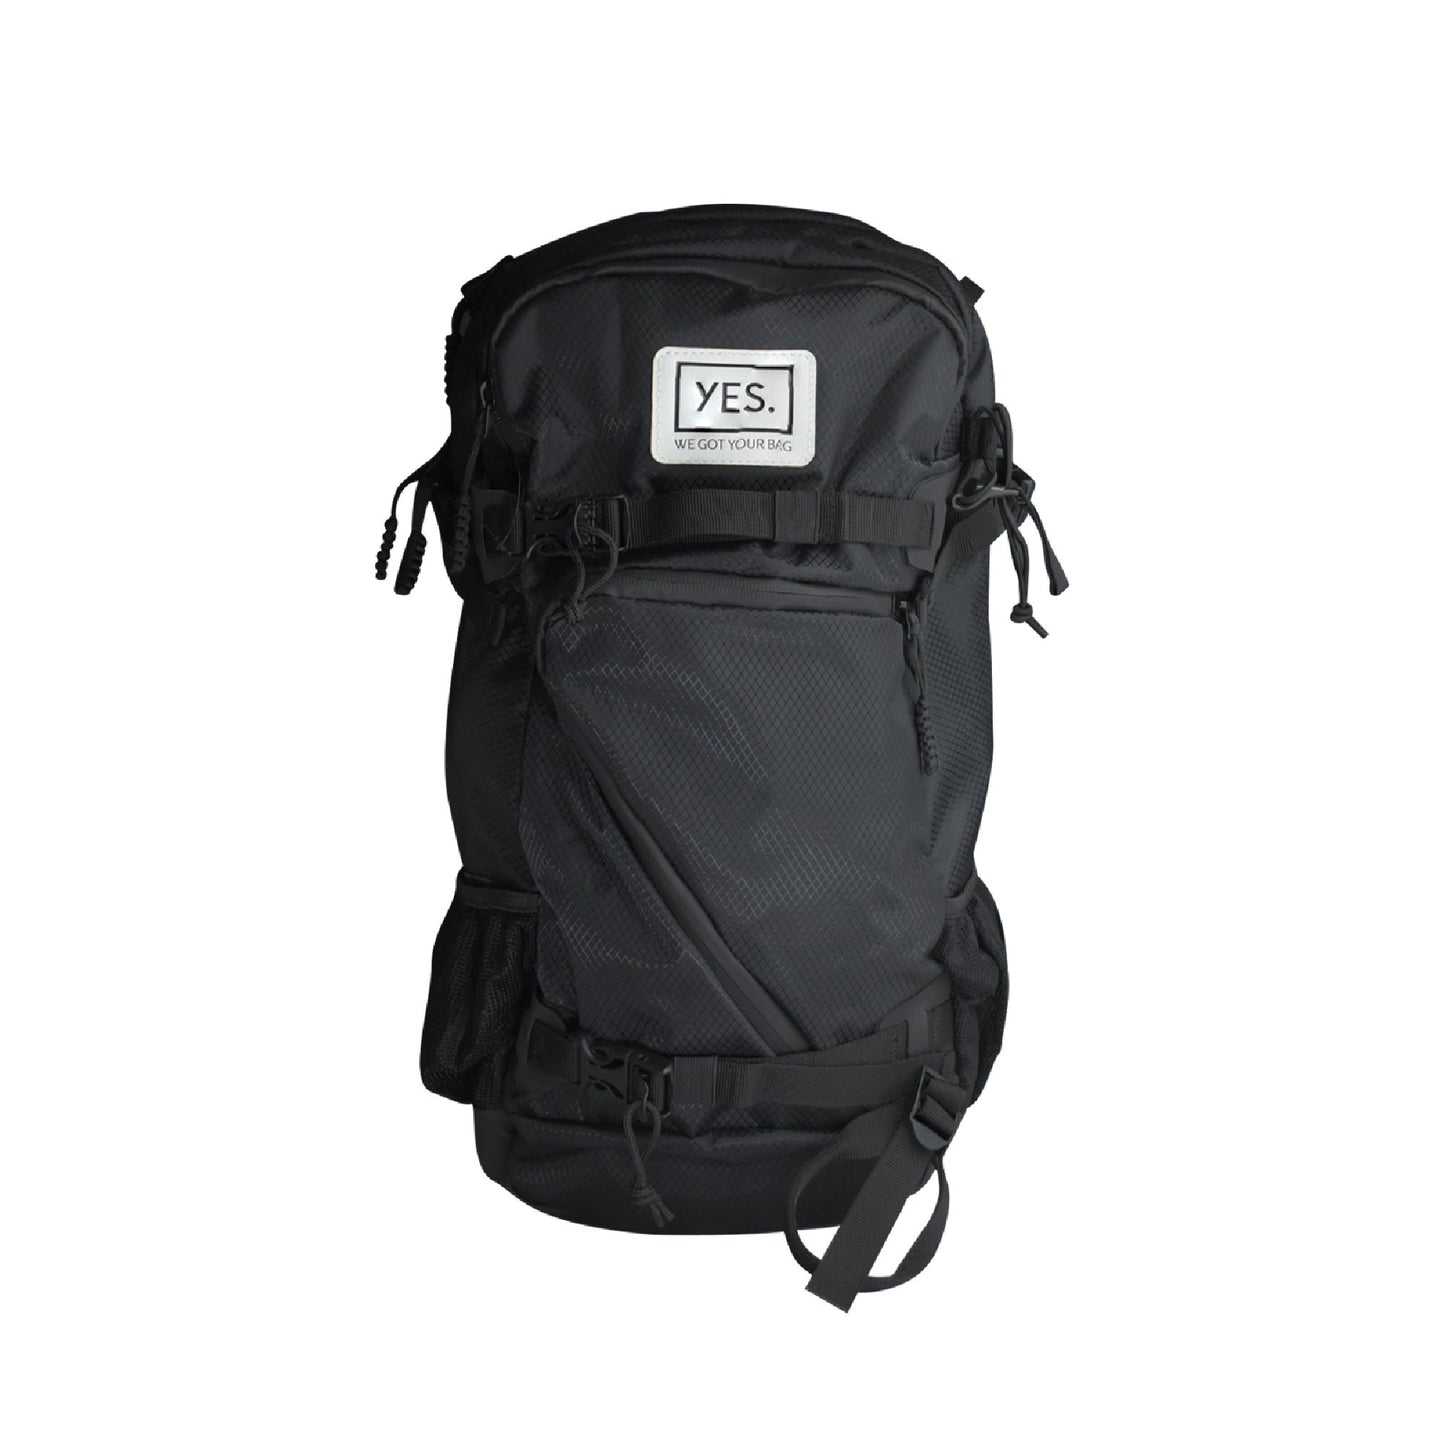 Yes. Backpack Black OS Bags & Packs